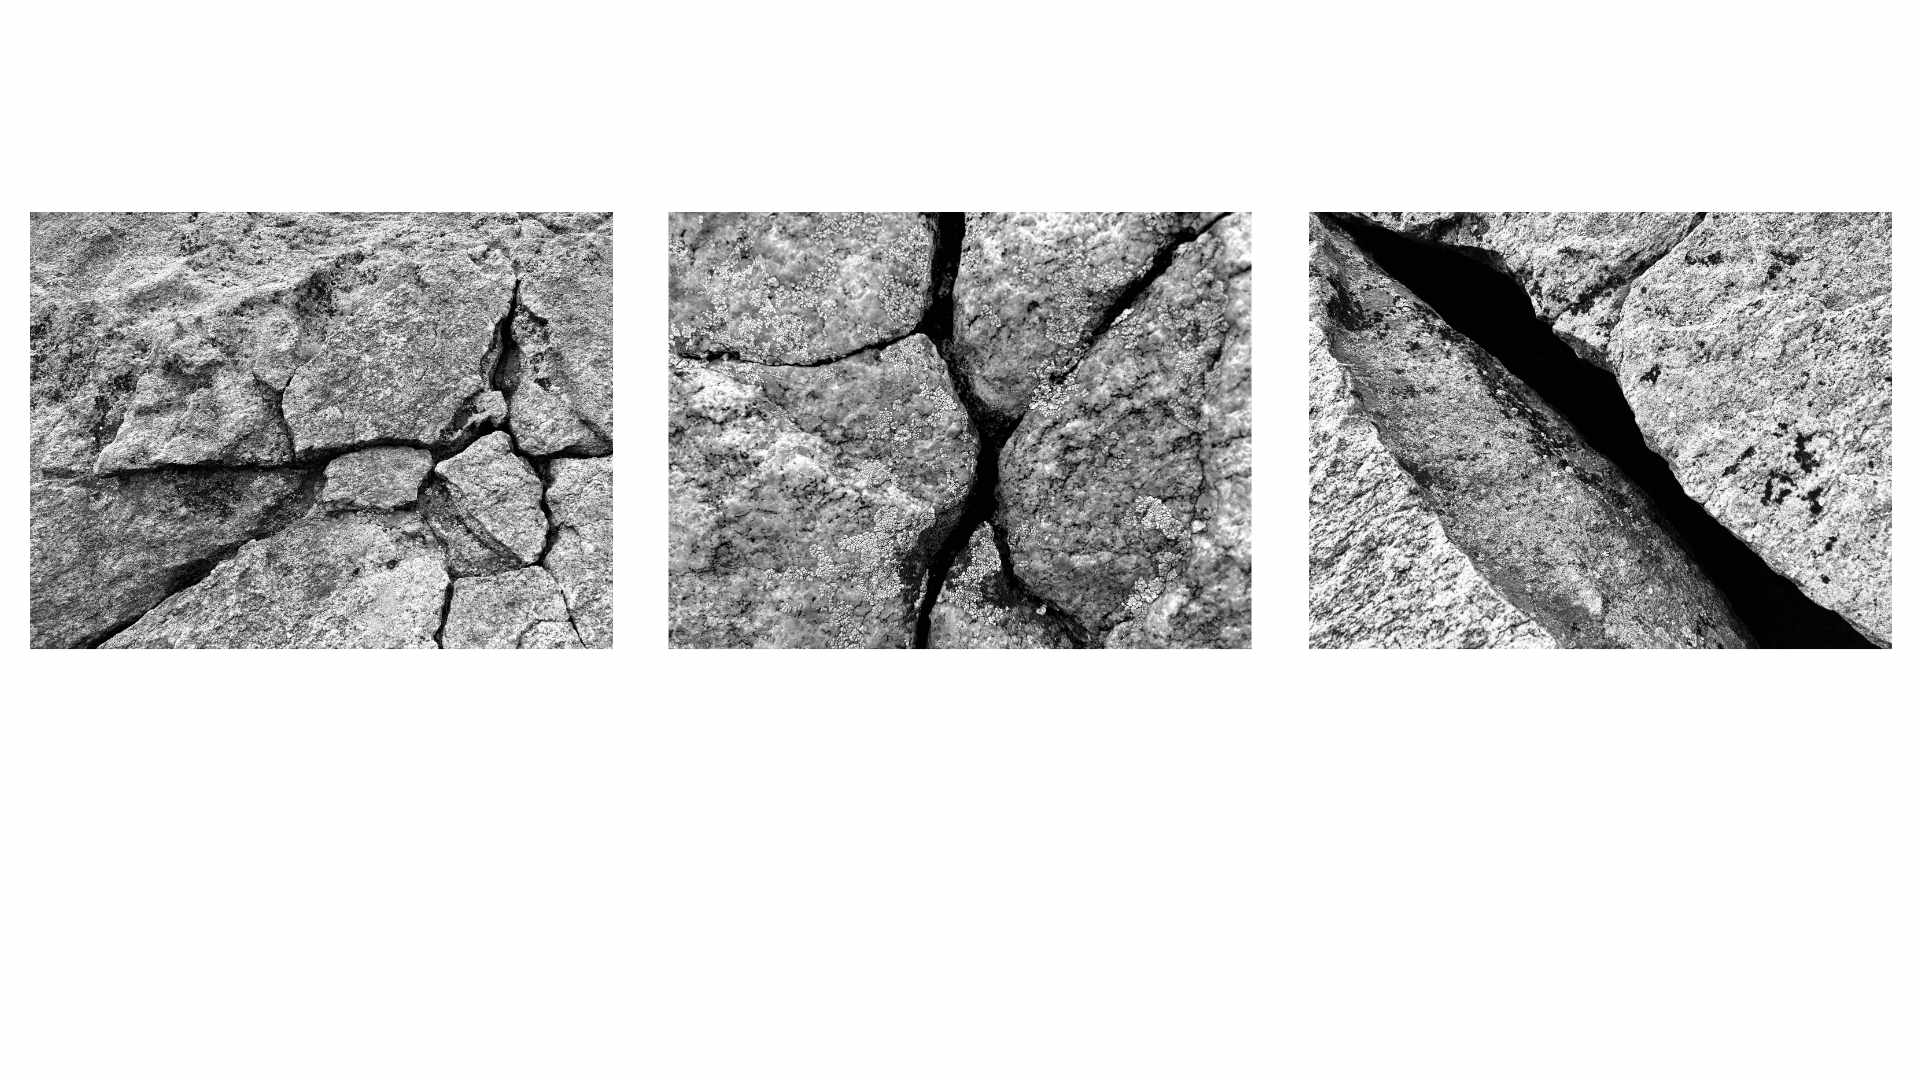 Three photos of rocks taken close up featuring cracks and lichen.